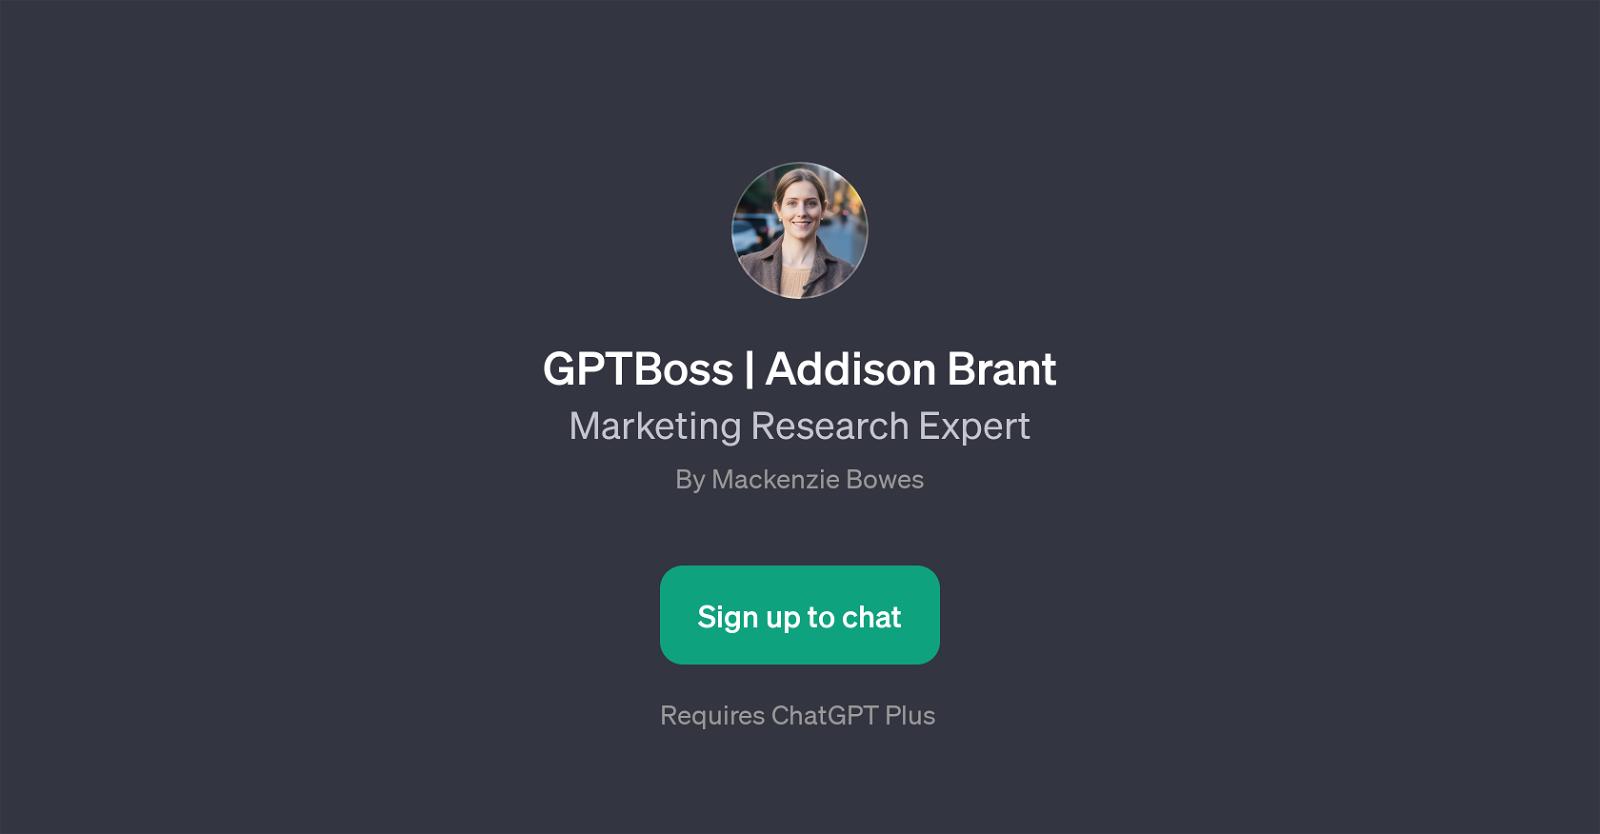 GPTBoss | Addison Brant website